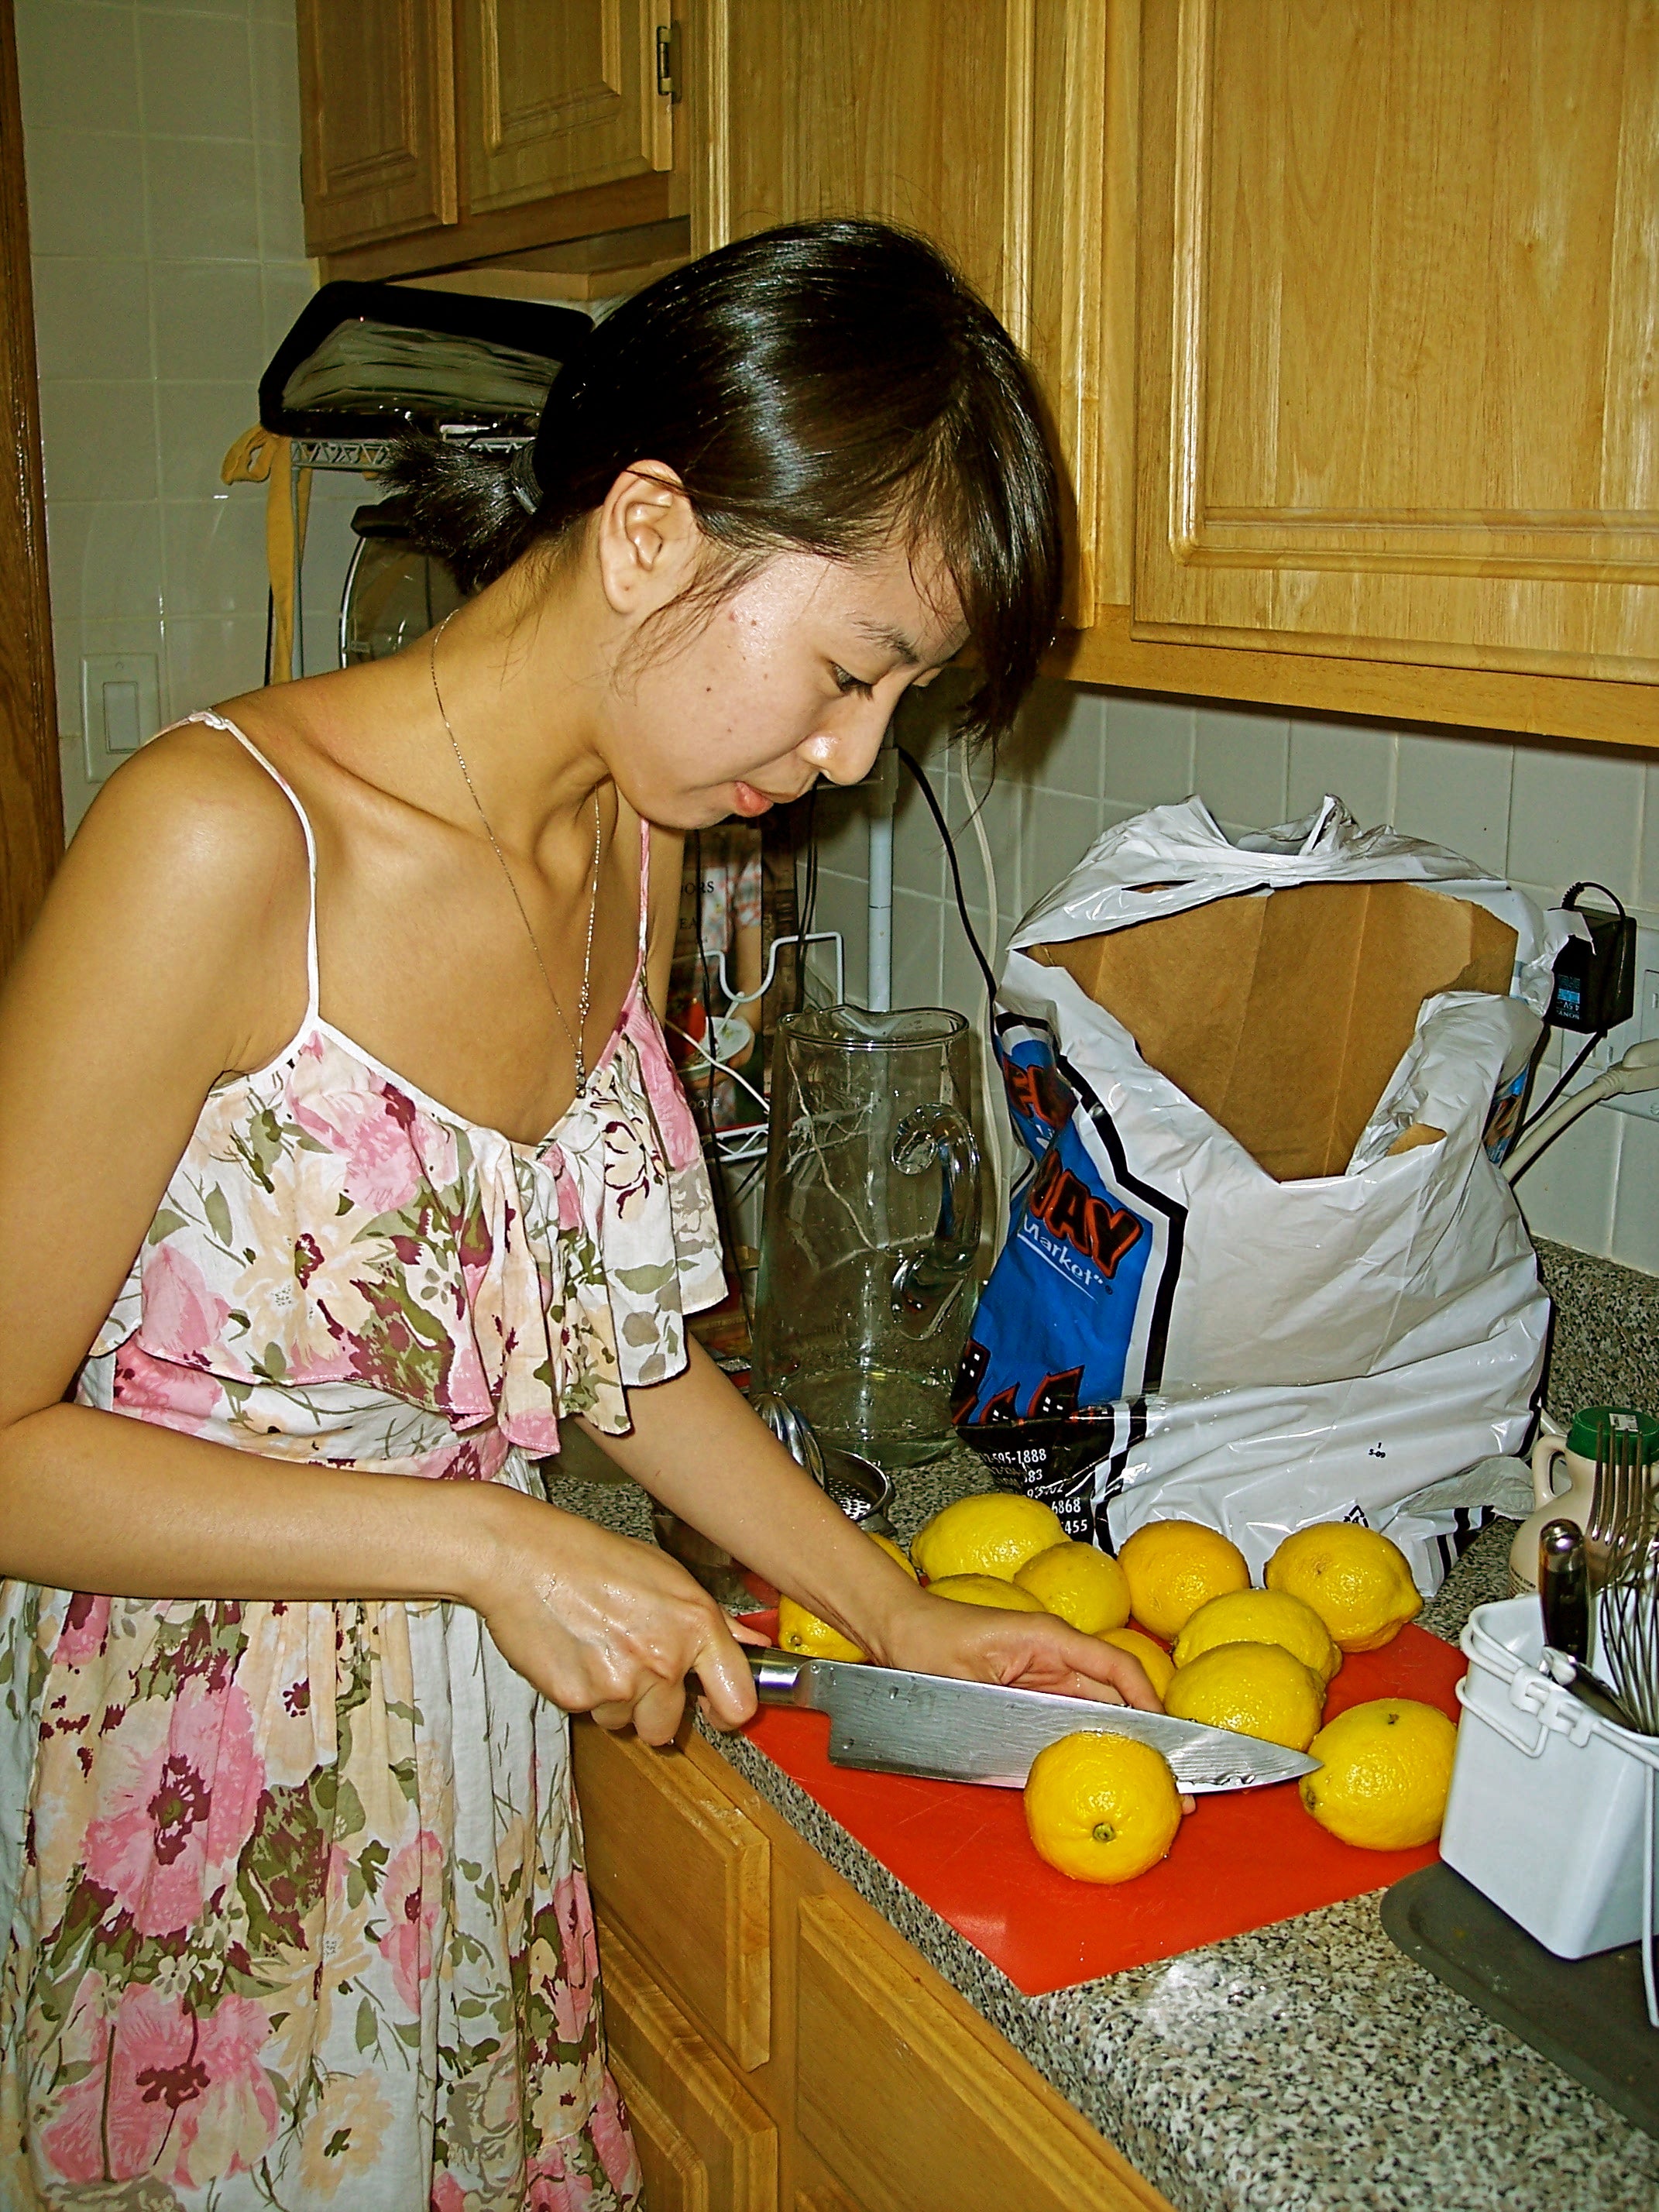 Florence slicing lemons